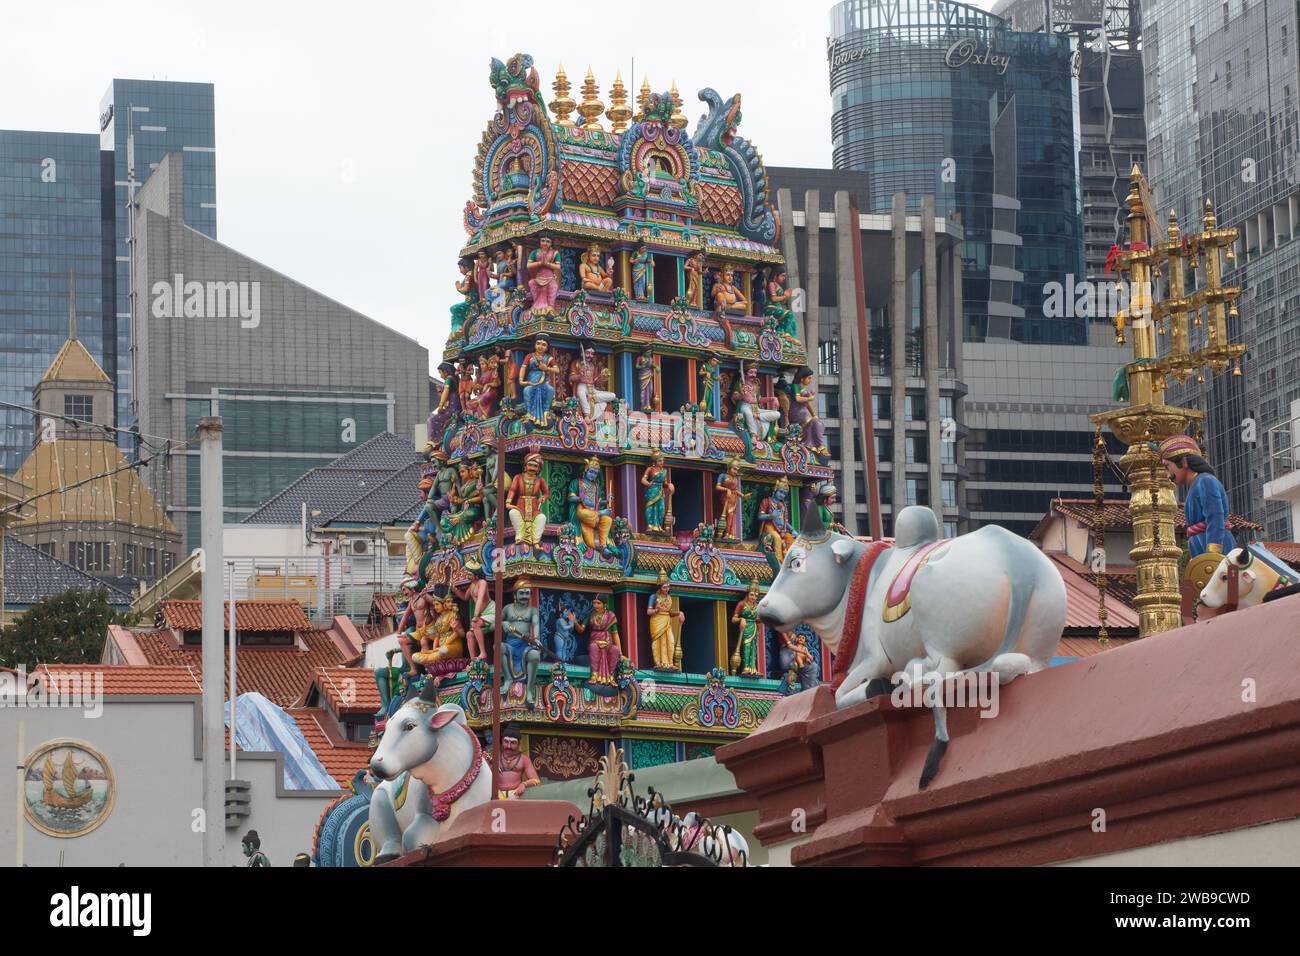 Sri Mariamman Temple is a very popular tourist attraction landmark at Chinatown, Singapore. Stock Photo